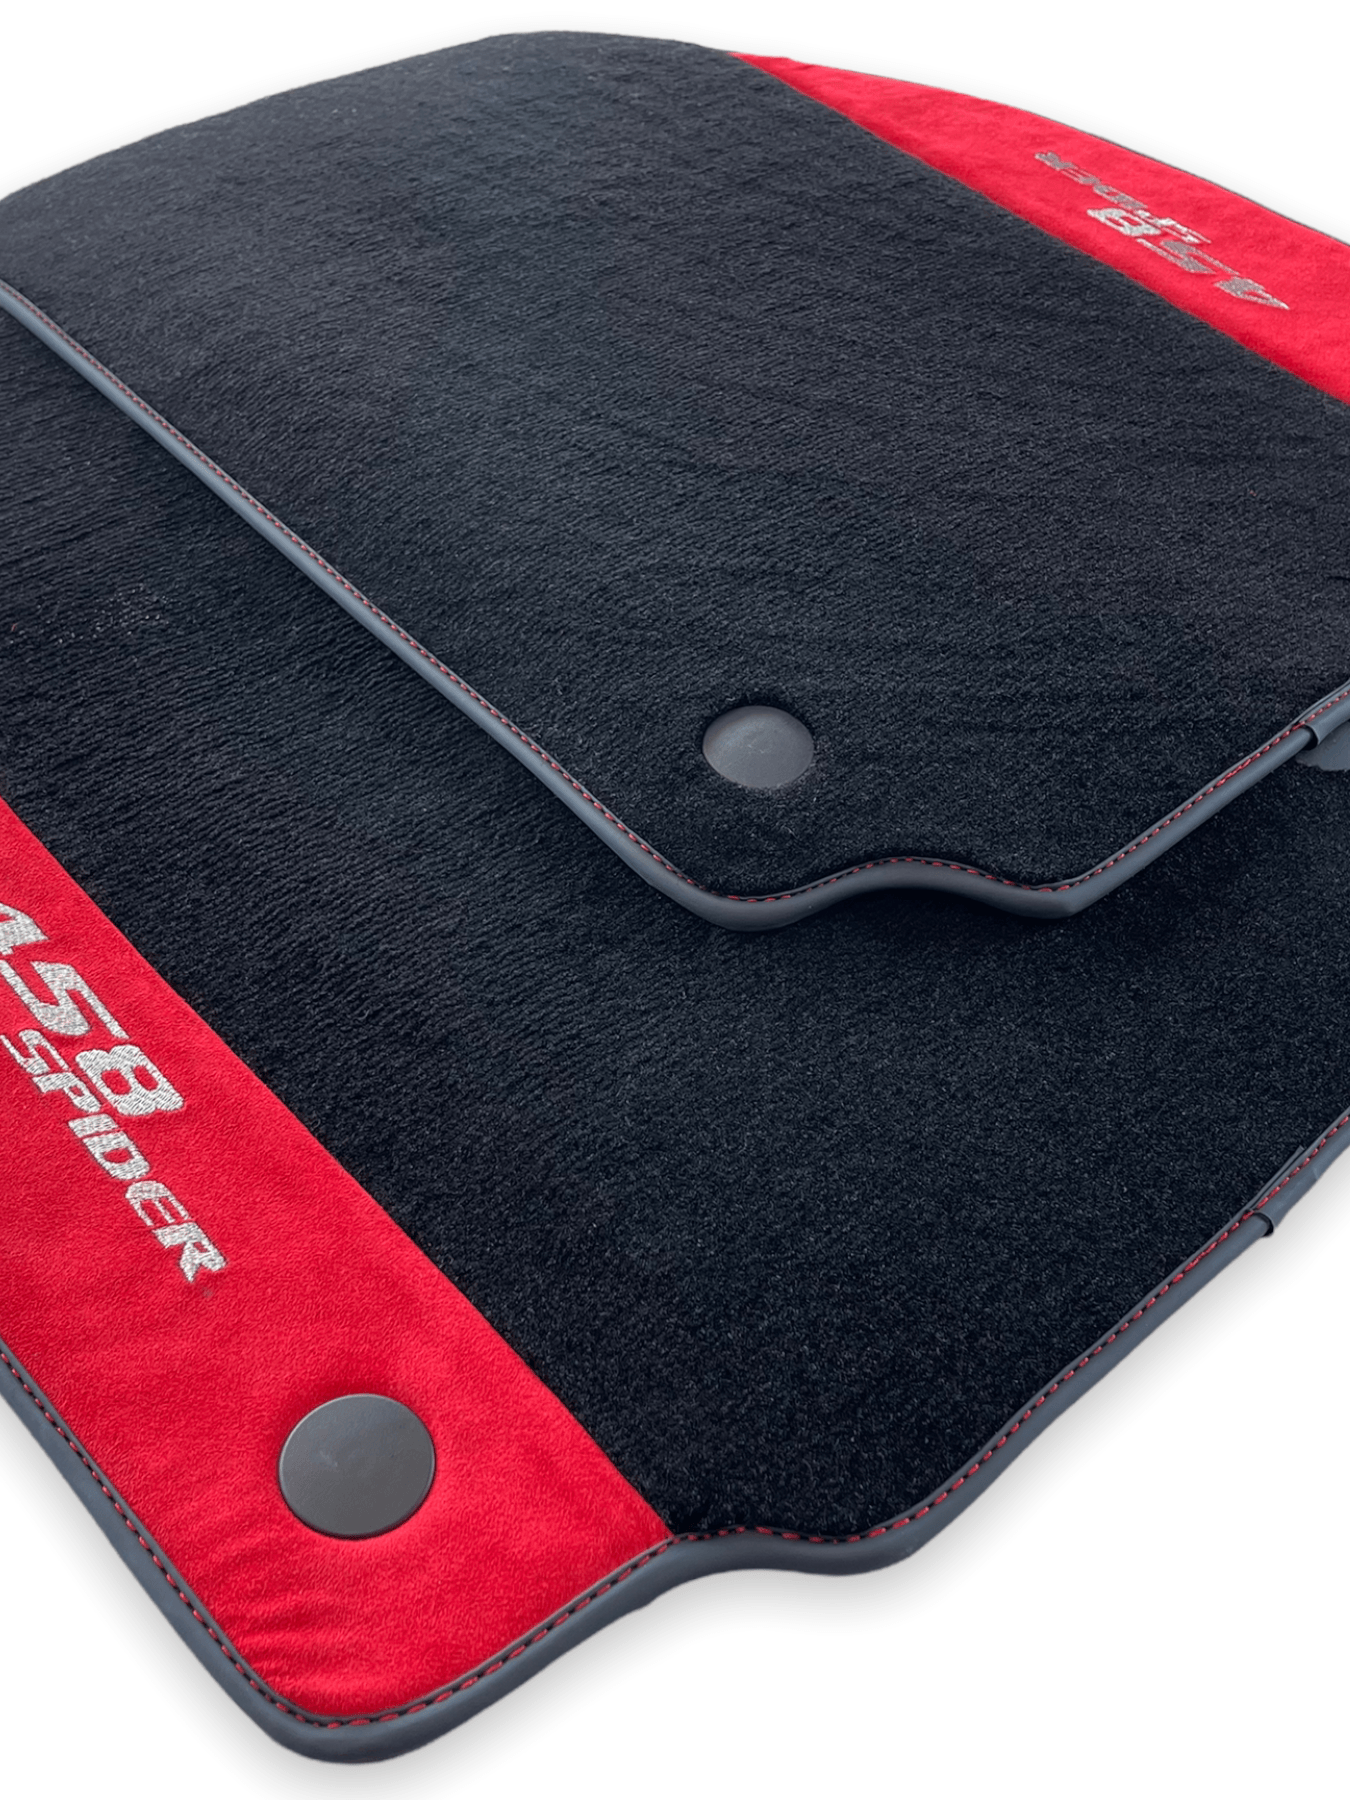 Floor Mats For Ferrari 458 Spider 2012-2015 Red Alcantara Leather - AutoWin